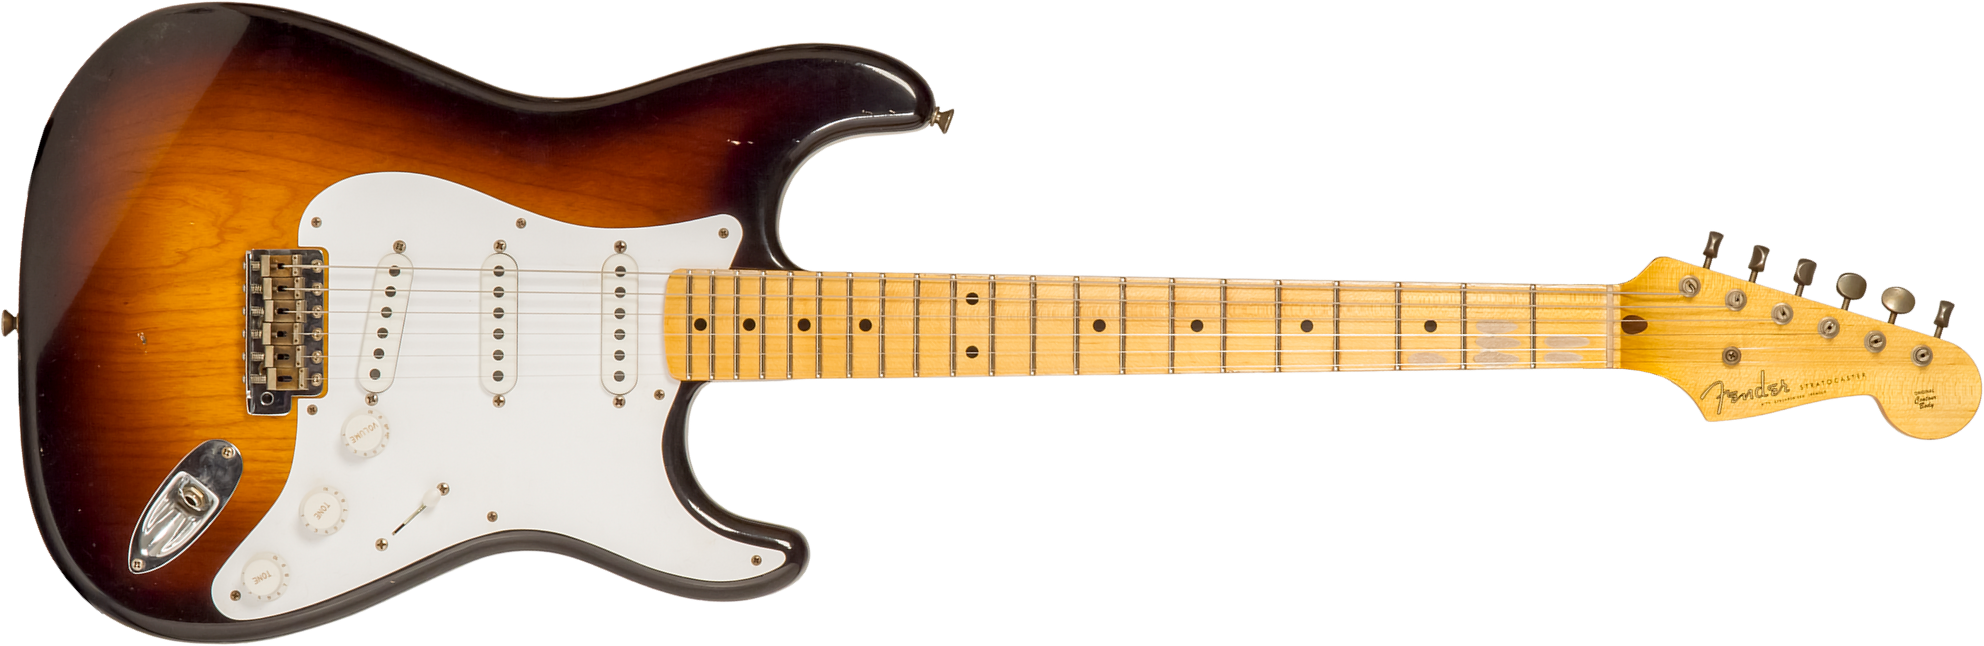 Fender Custom Shop Strat 1954 70th Anniv. 3s Trem Mn #xn4199 - Journeyman Relic Wide-fade 2-color Sunburst - Elektrische gitaar in Str-vorm - Main pic